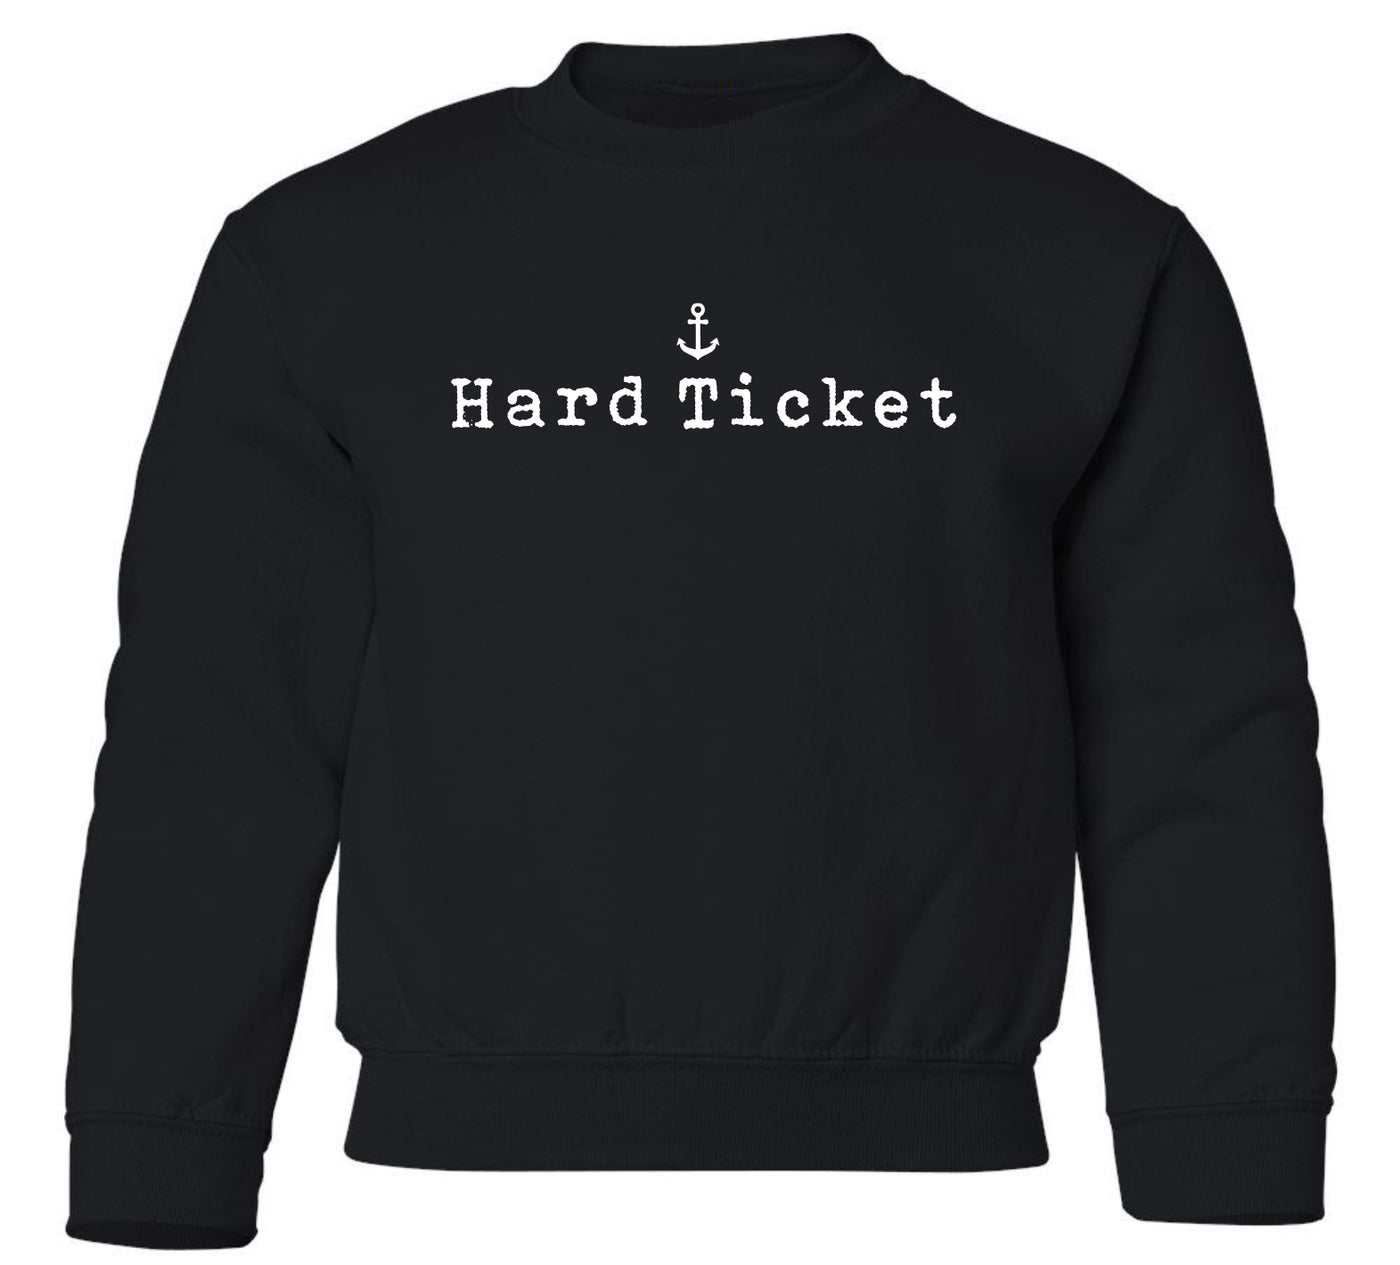 "Hard Ticket" Toddler/Youth Crewneck Sweatshirt